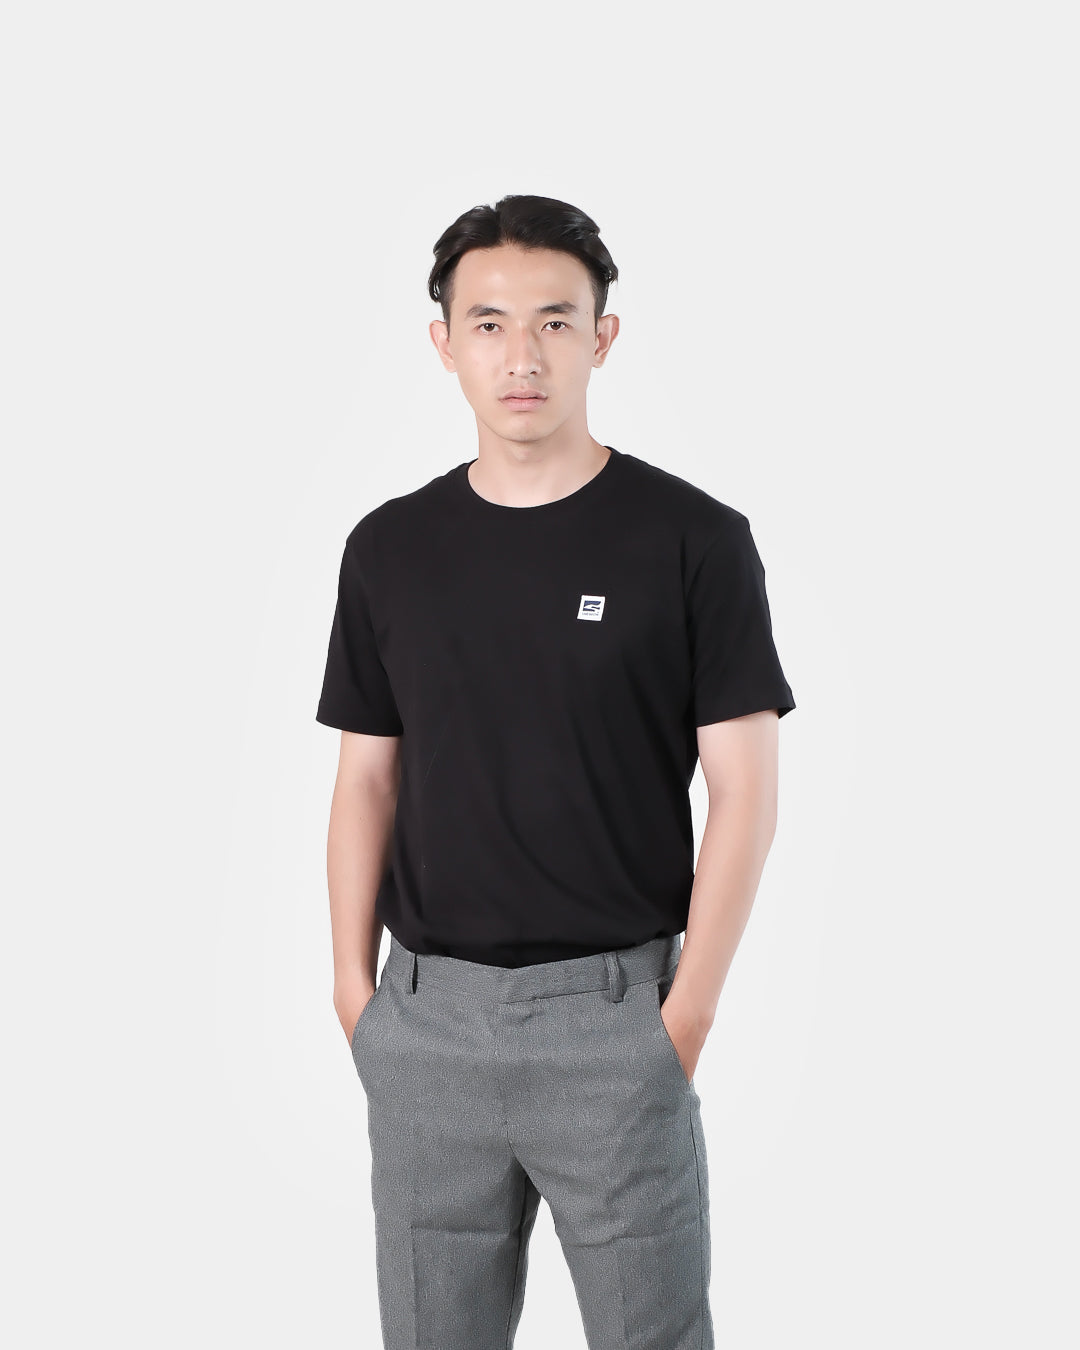 Sneakon Unisex Basic Tshirt Black